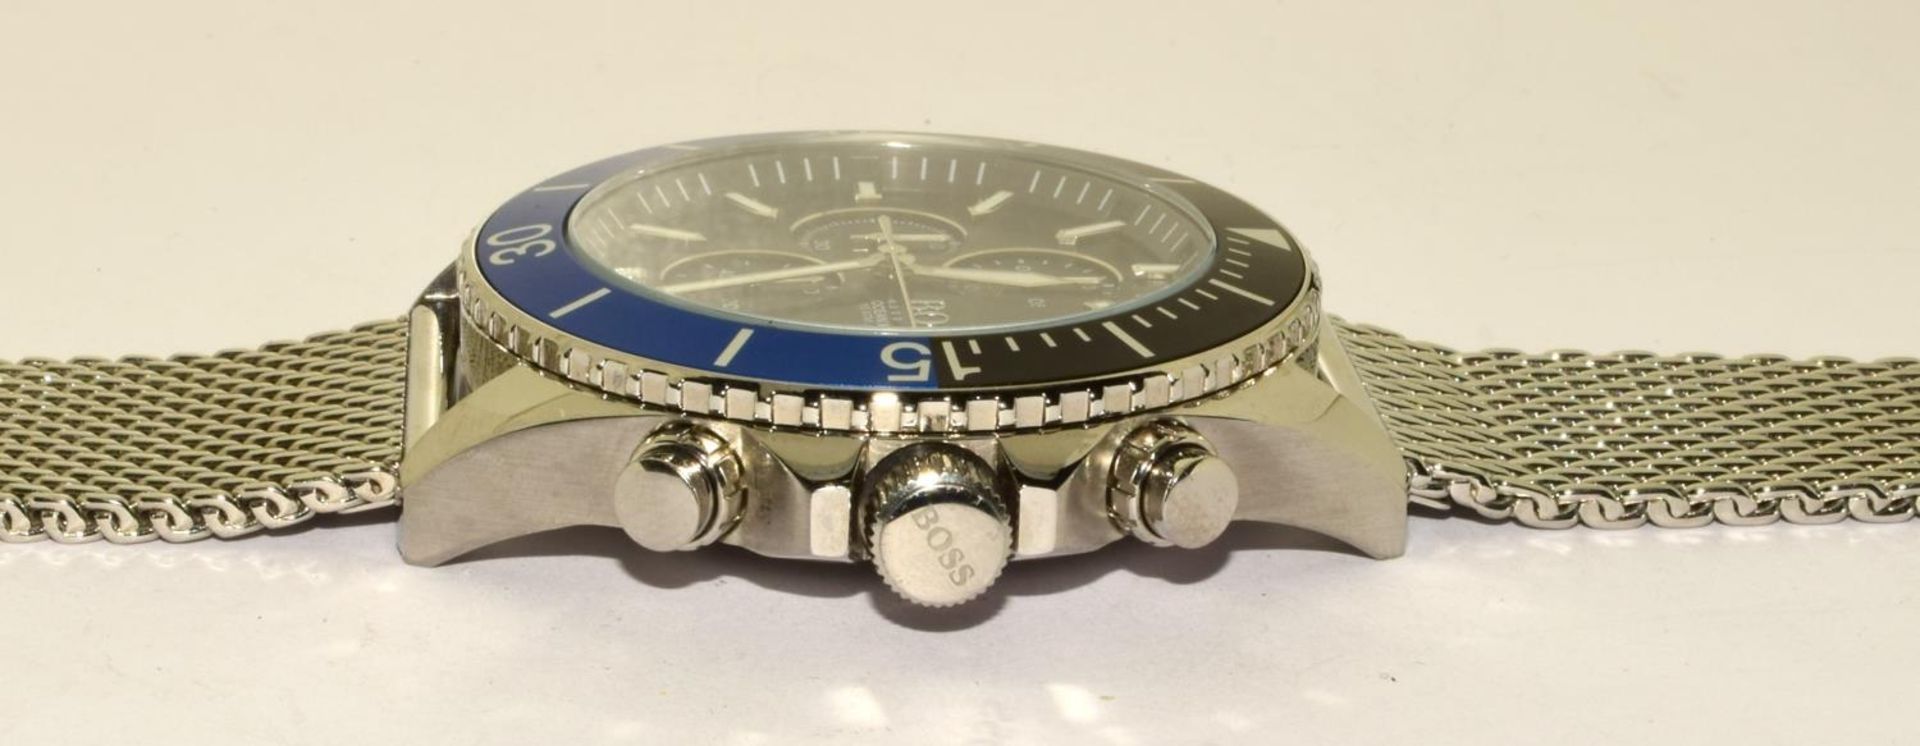 Boss ocean Edition chronograph fashion watch ref 22 - Image 3 of 6